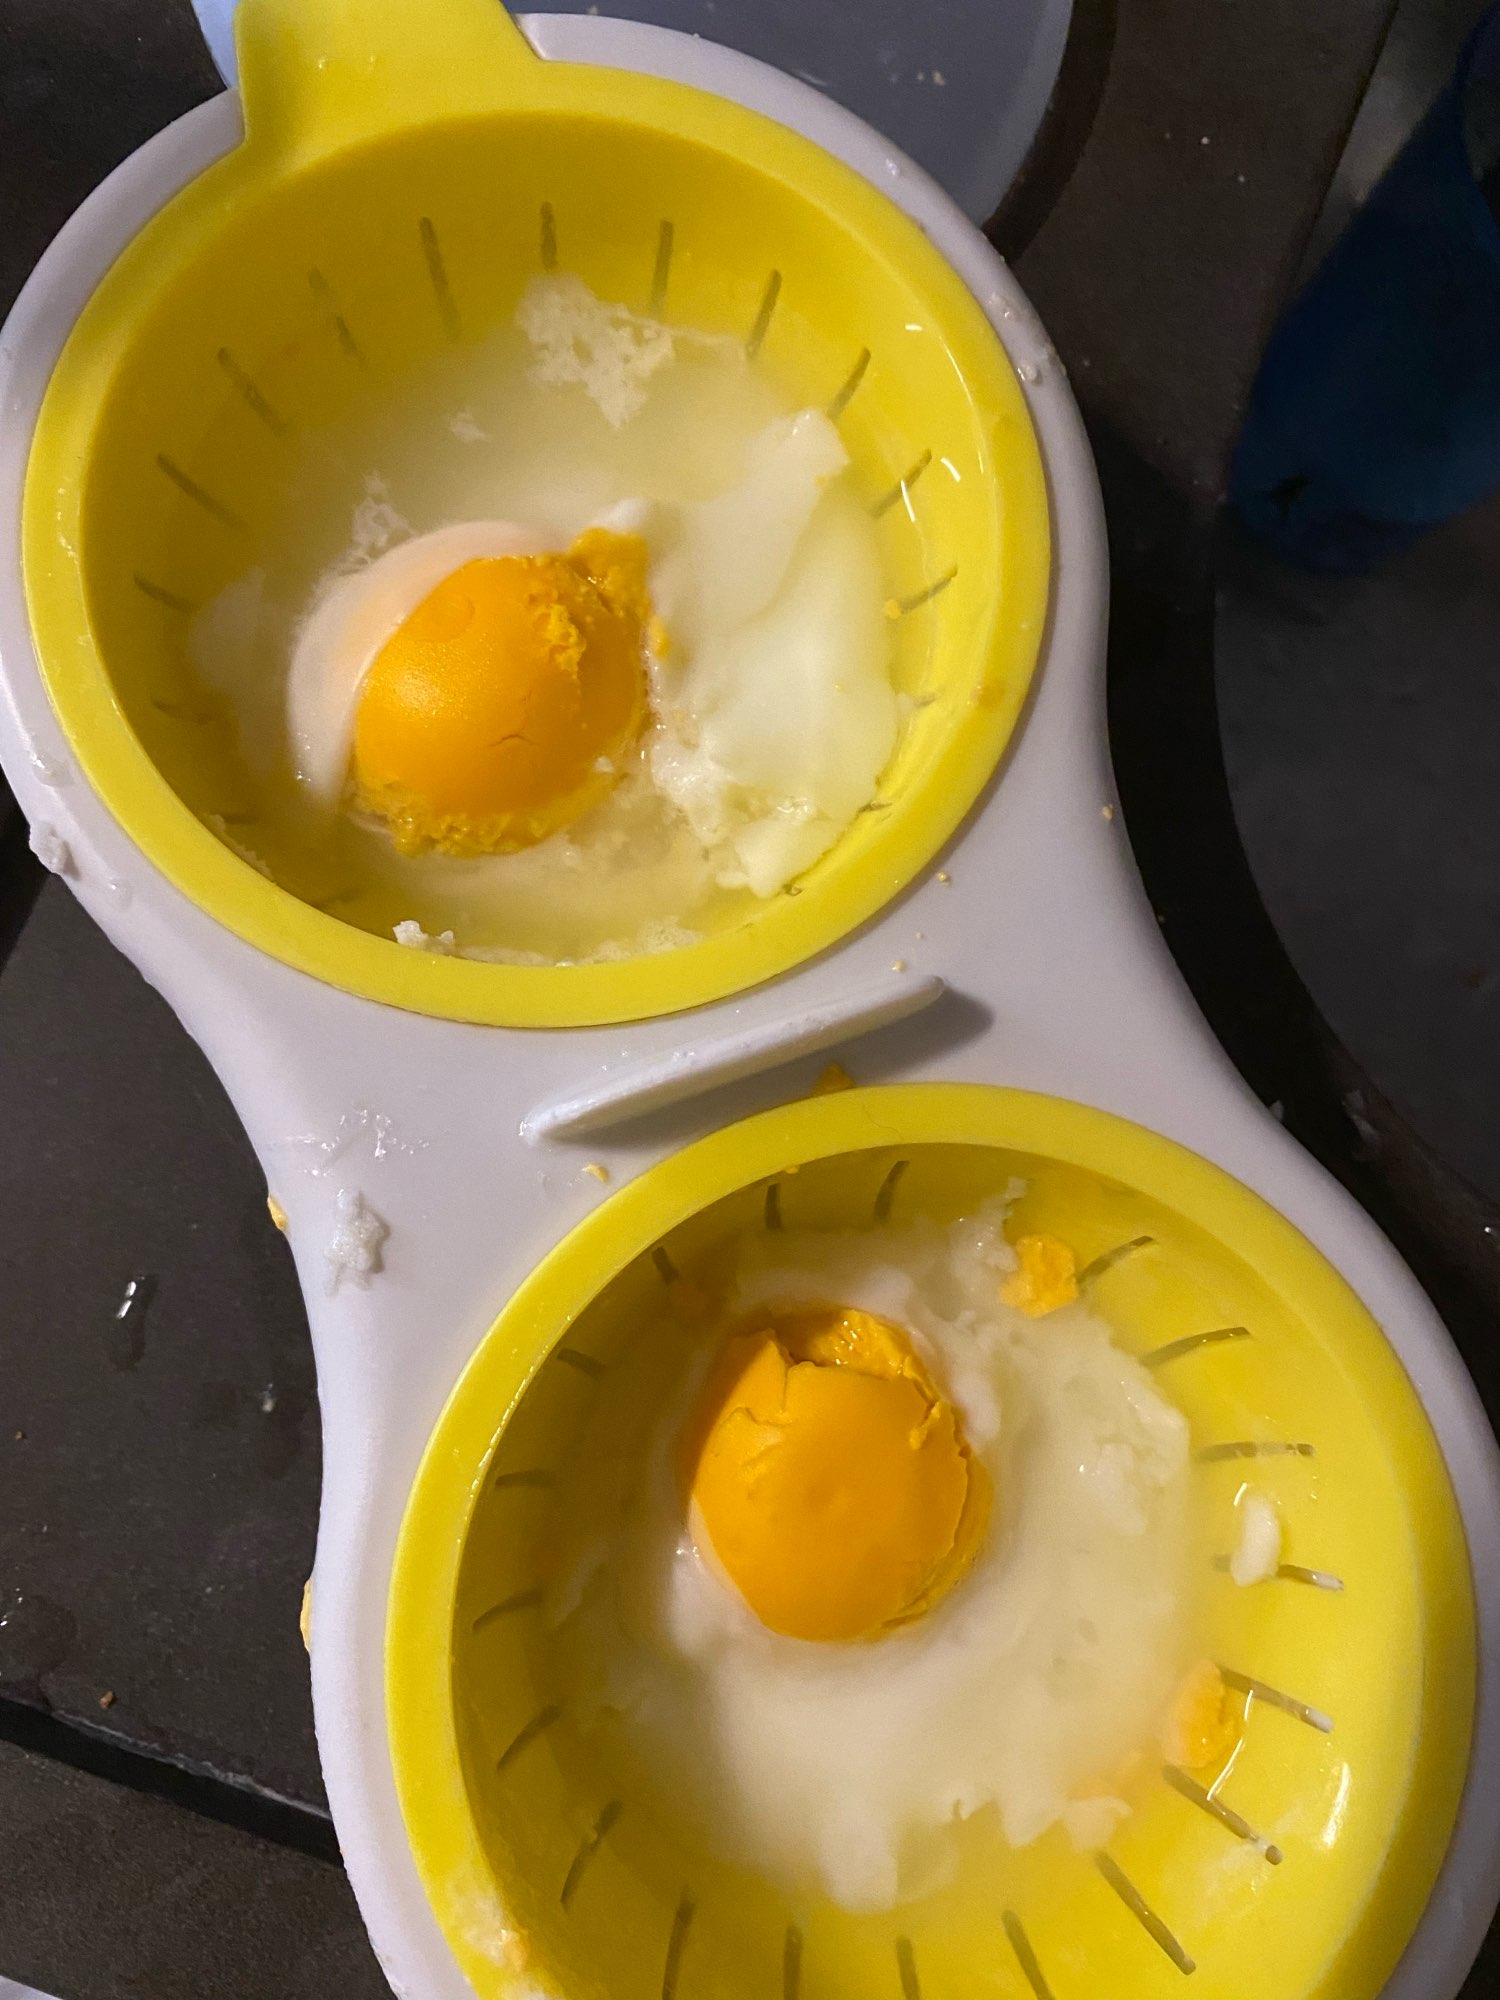 microwave eggs poacher double cup egg